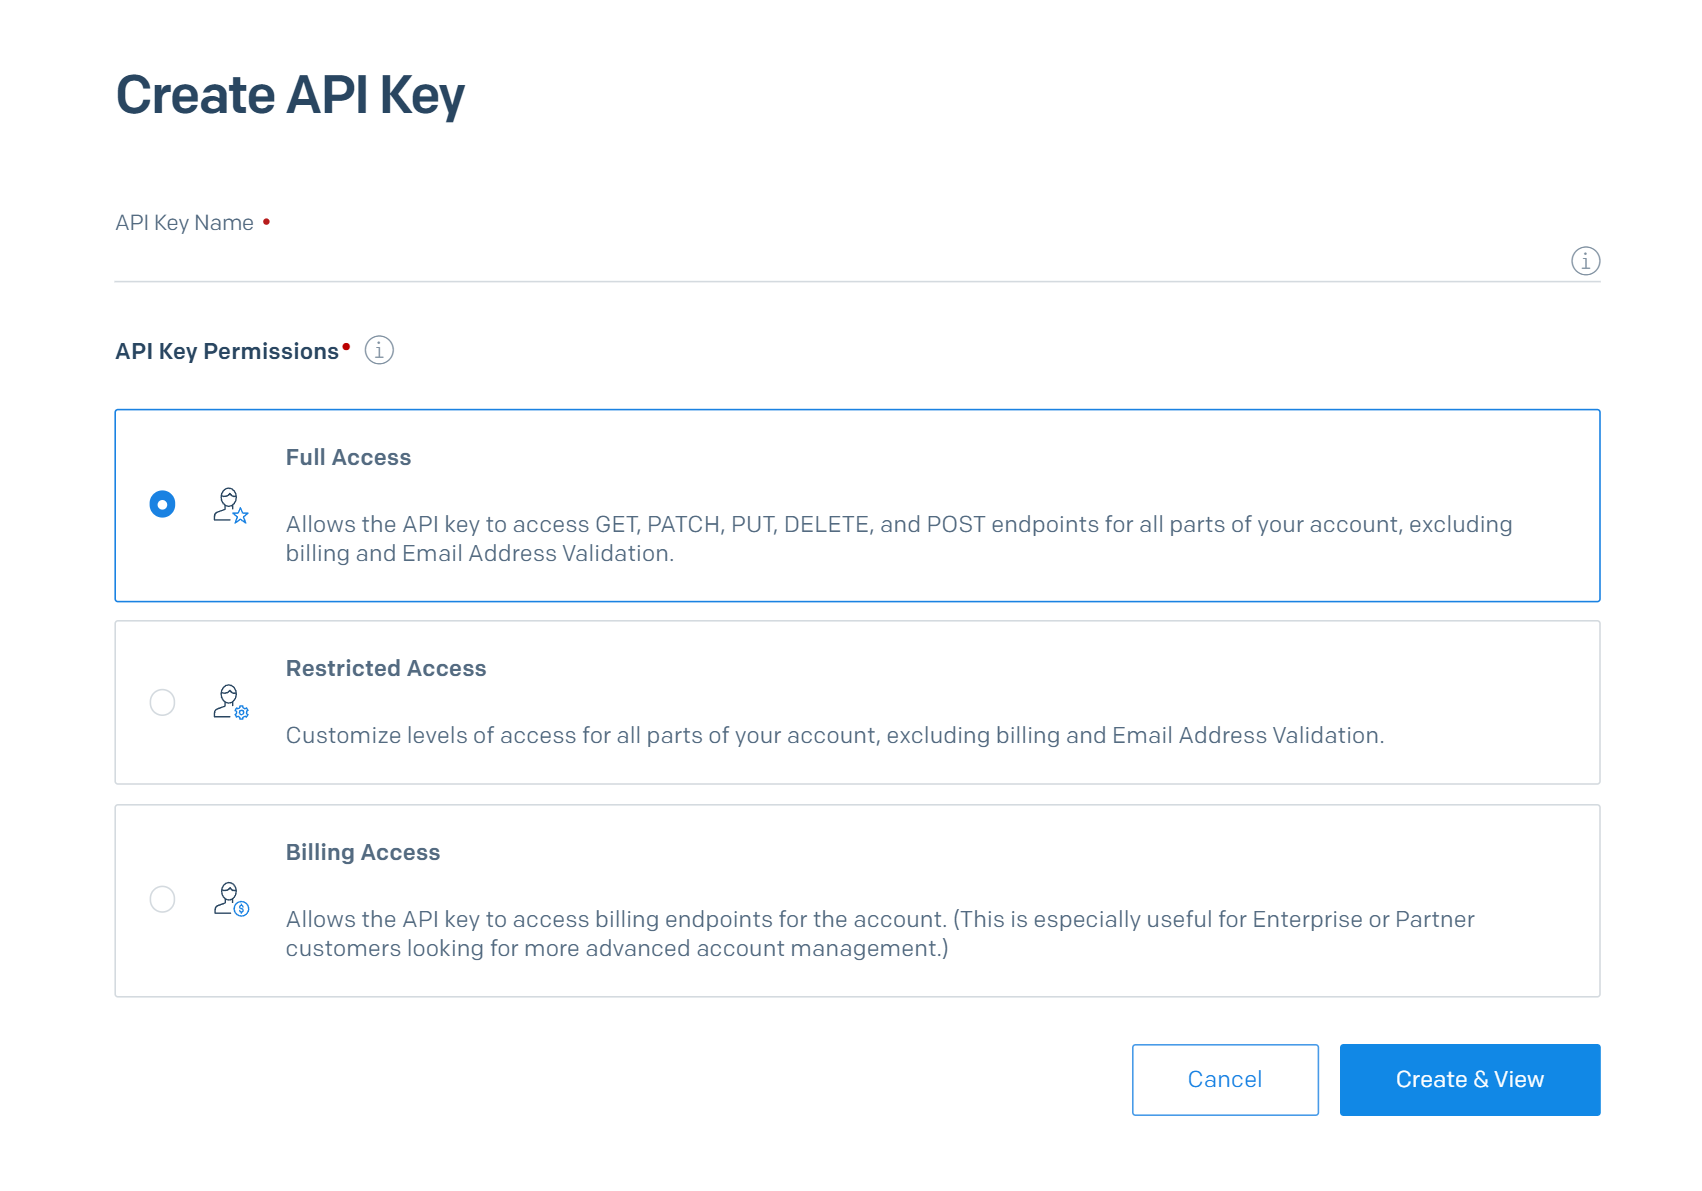 SendGrid API Key Permissions